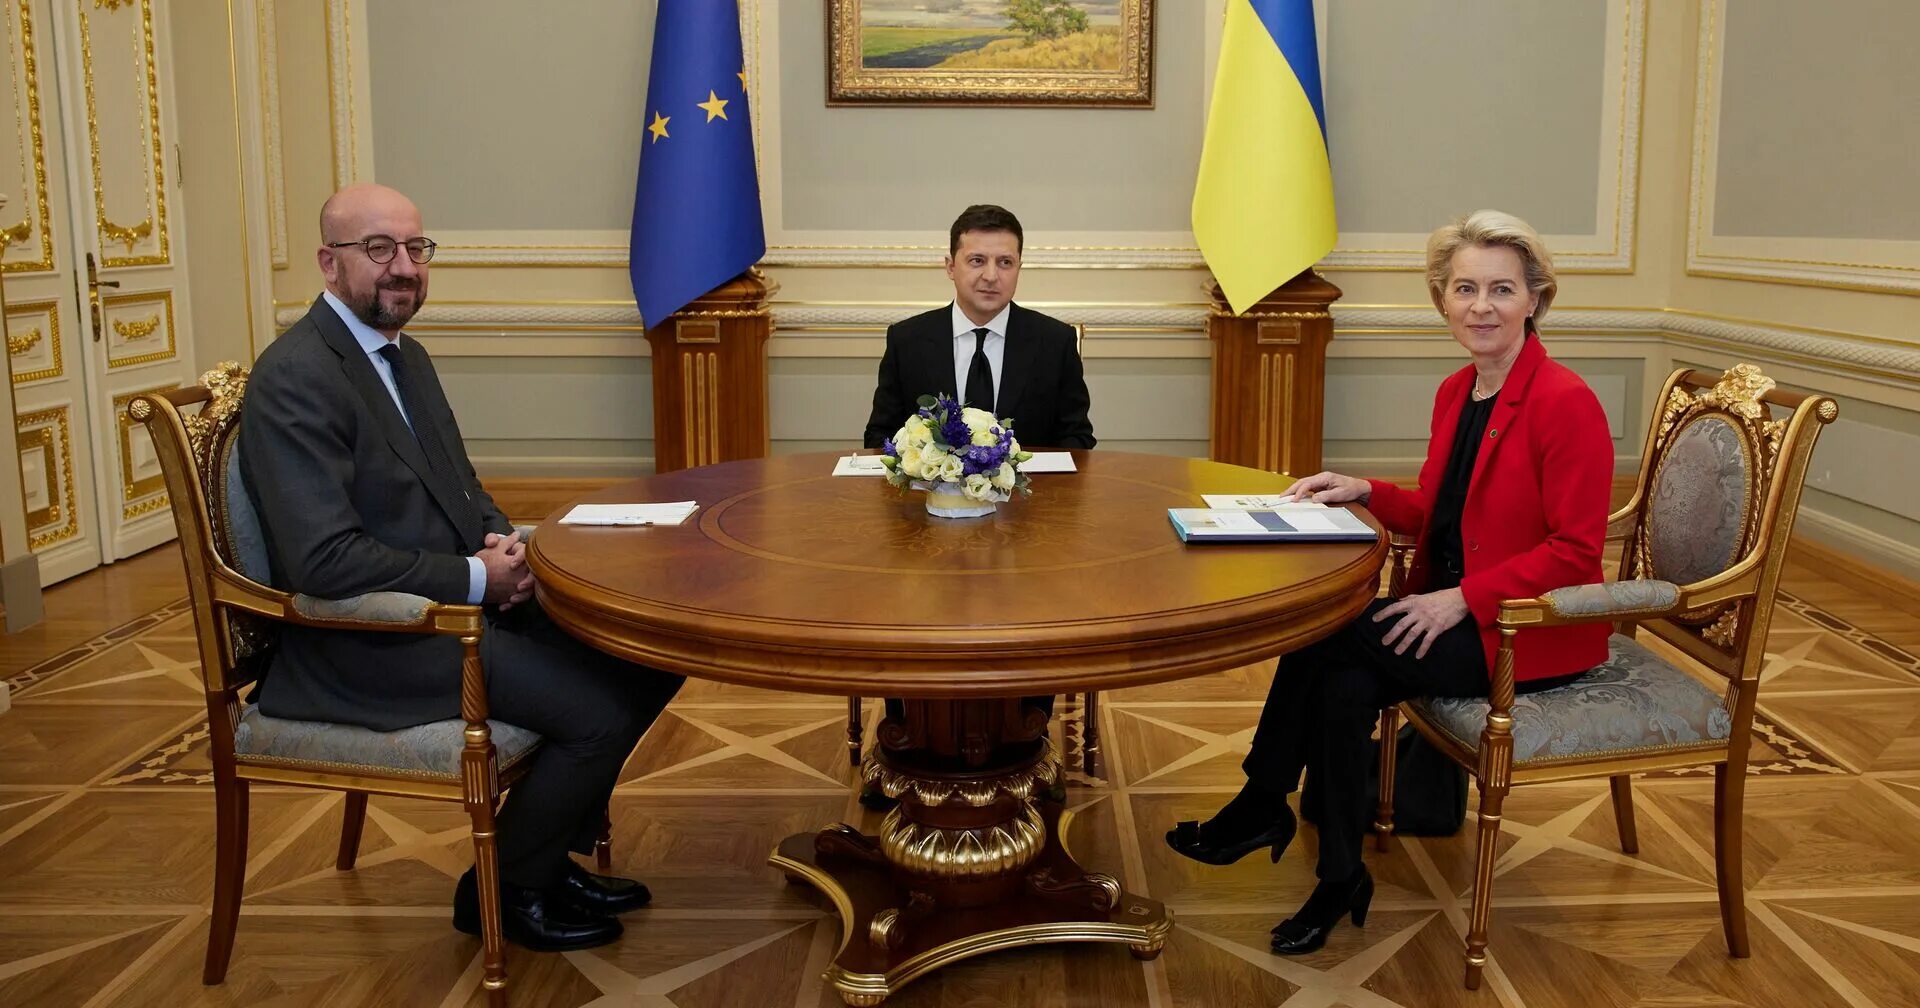 Саммит Украина ЕС. Фон дер Ляйен саммит Евросоюза. Украина Евросоюз. Саммит россия украина